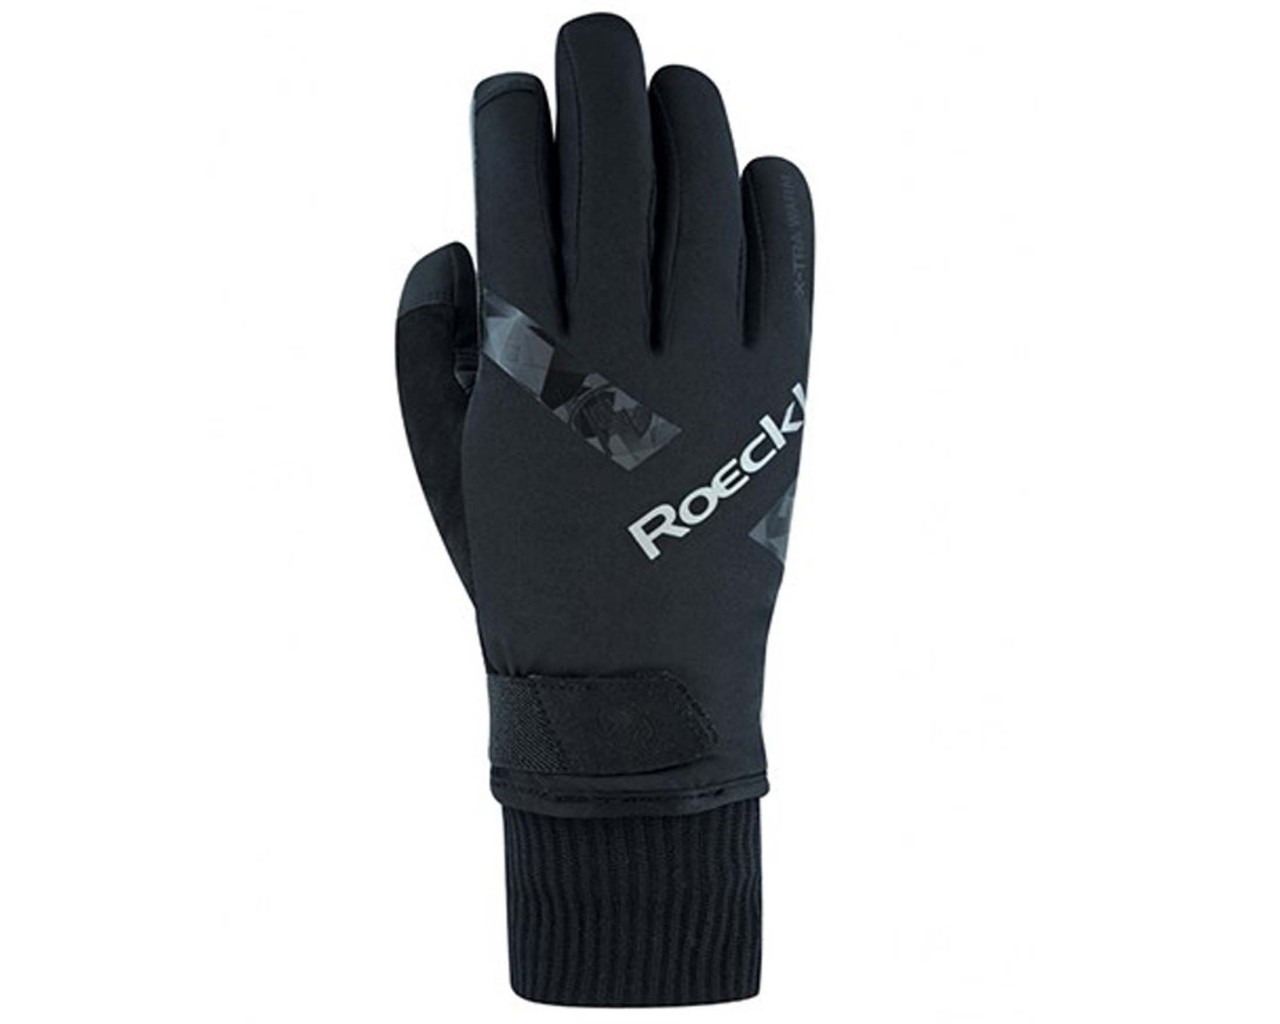 Roeckl Vaduz GTX Gloves long fingers | black